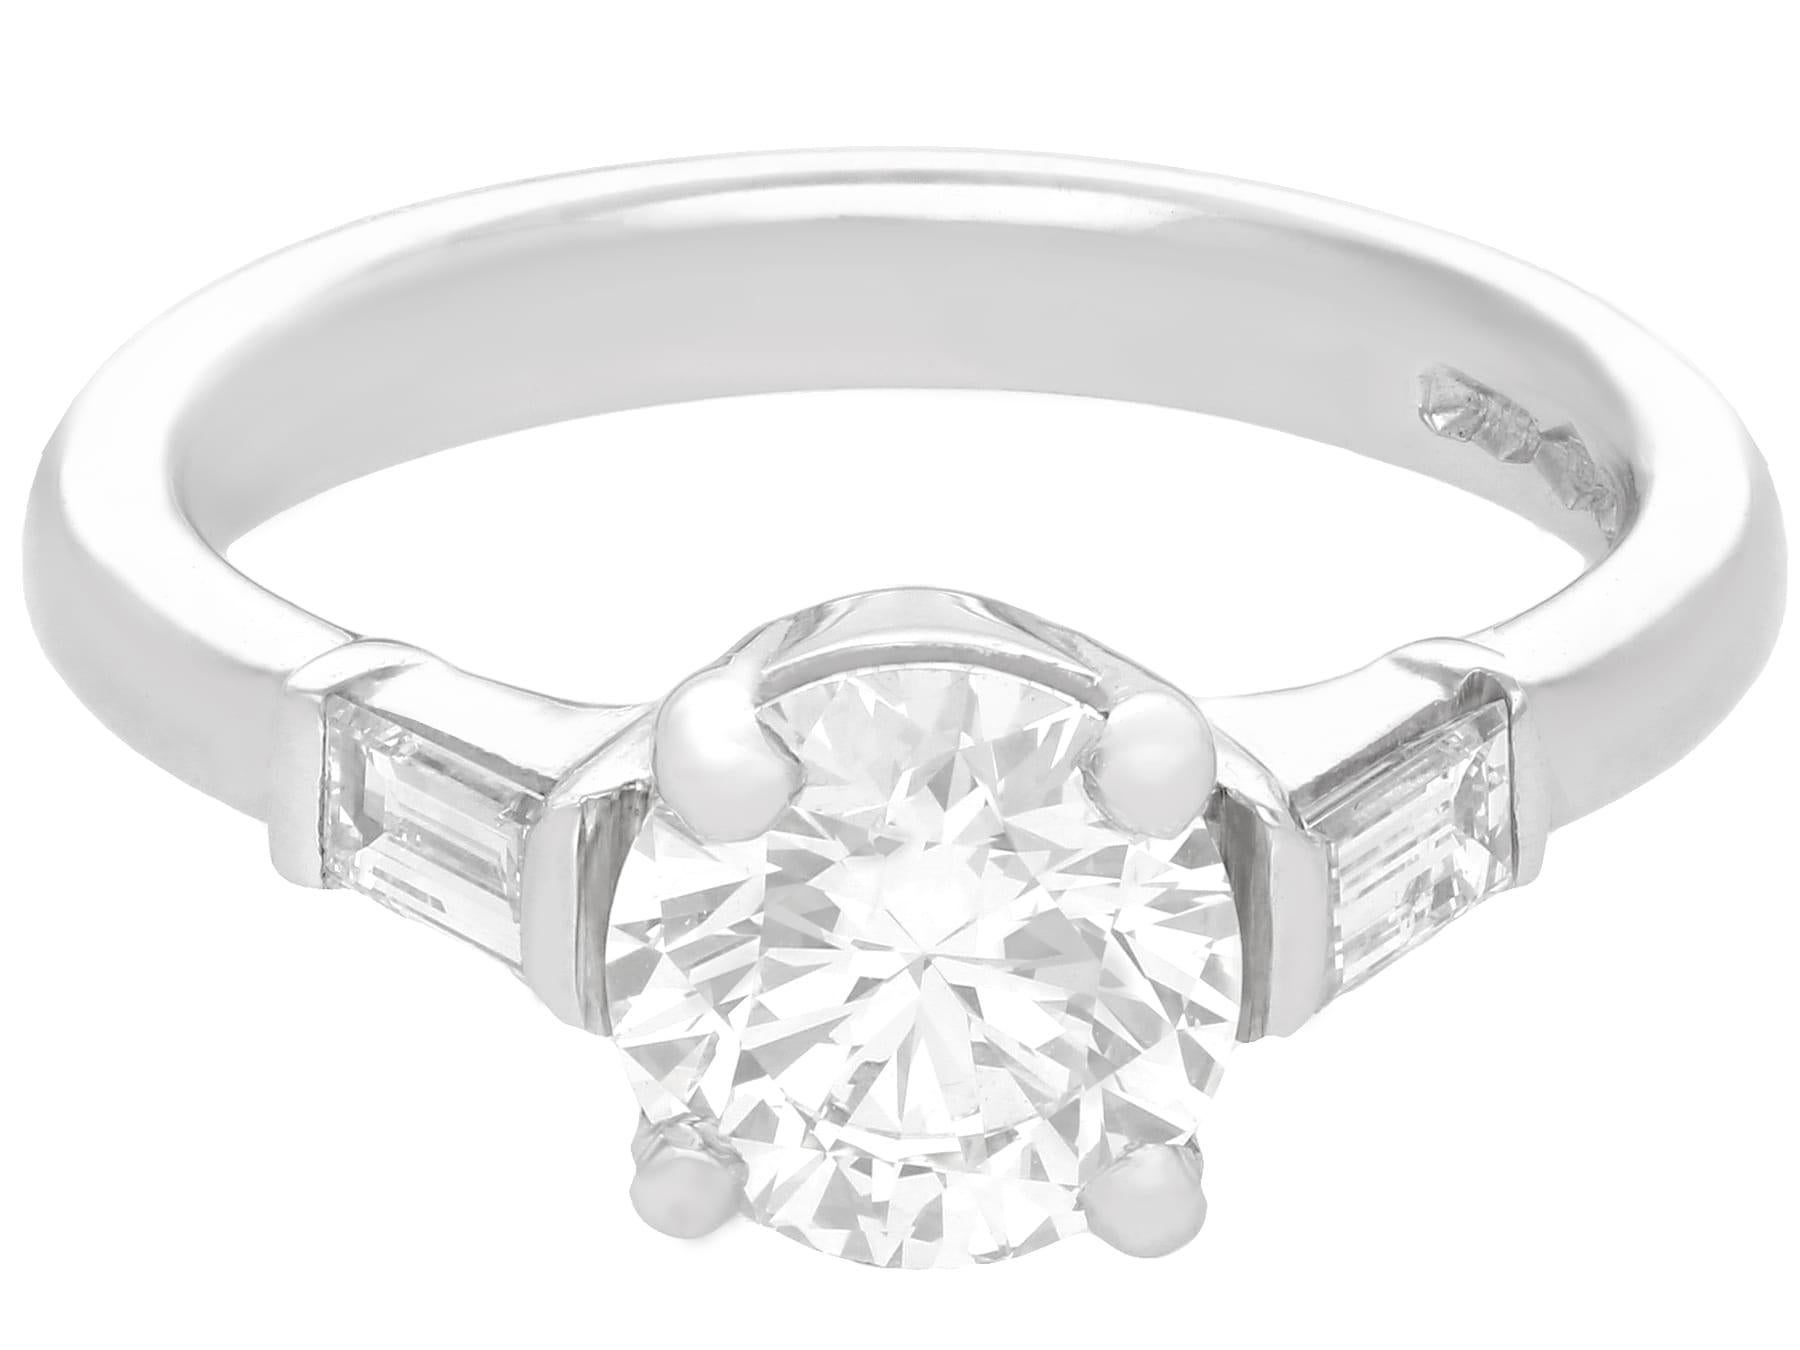 5 carat diamond ring for sale